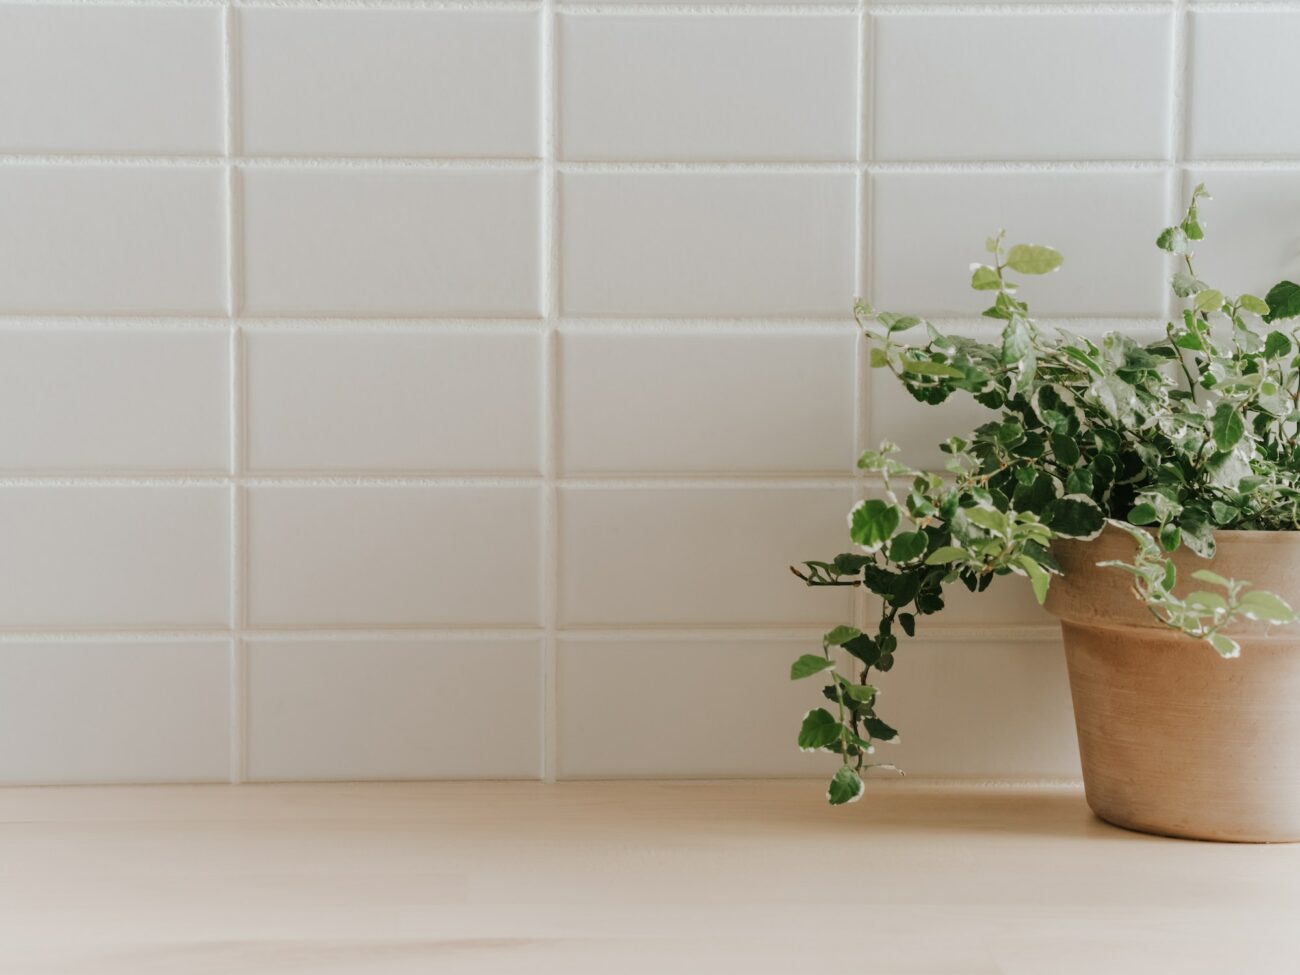 Ceramic tiles with plant